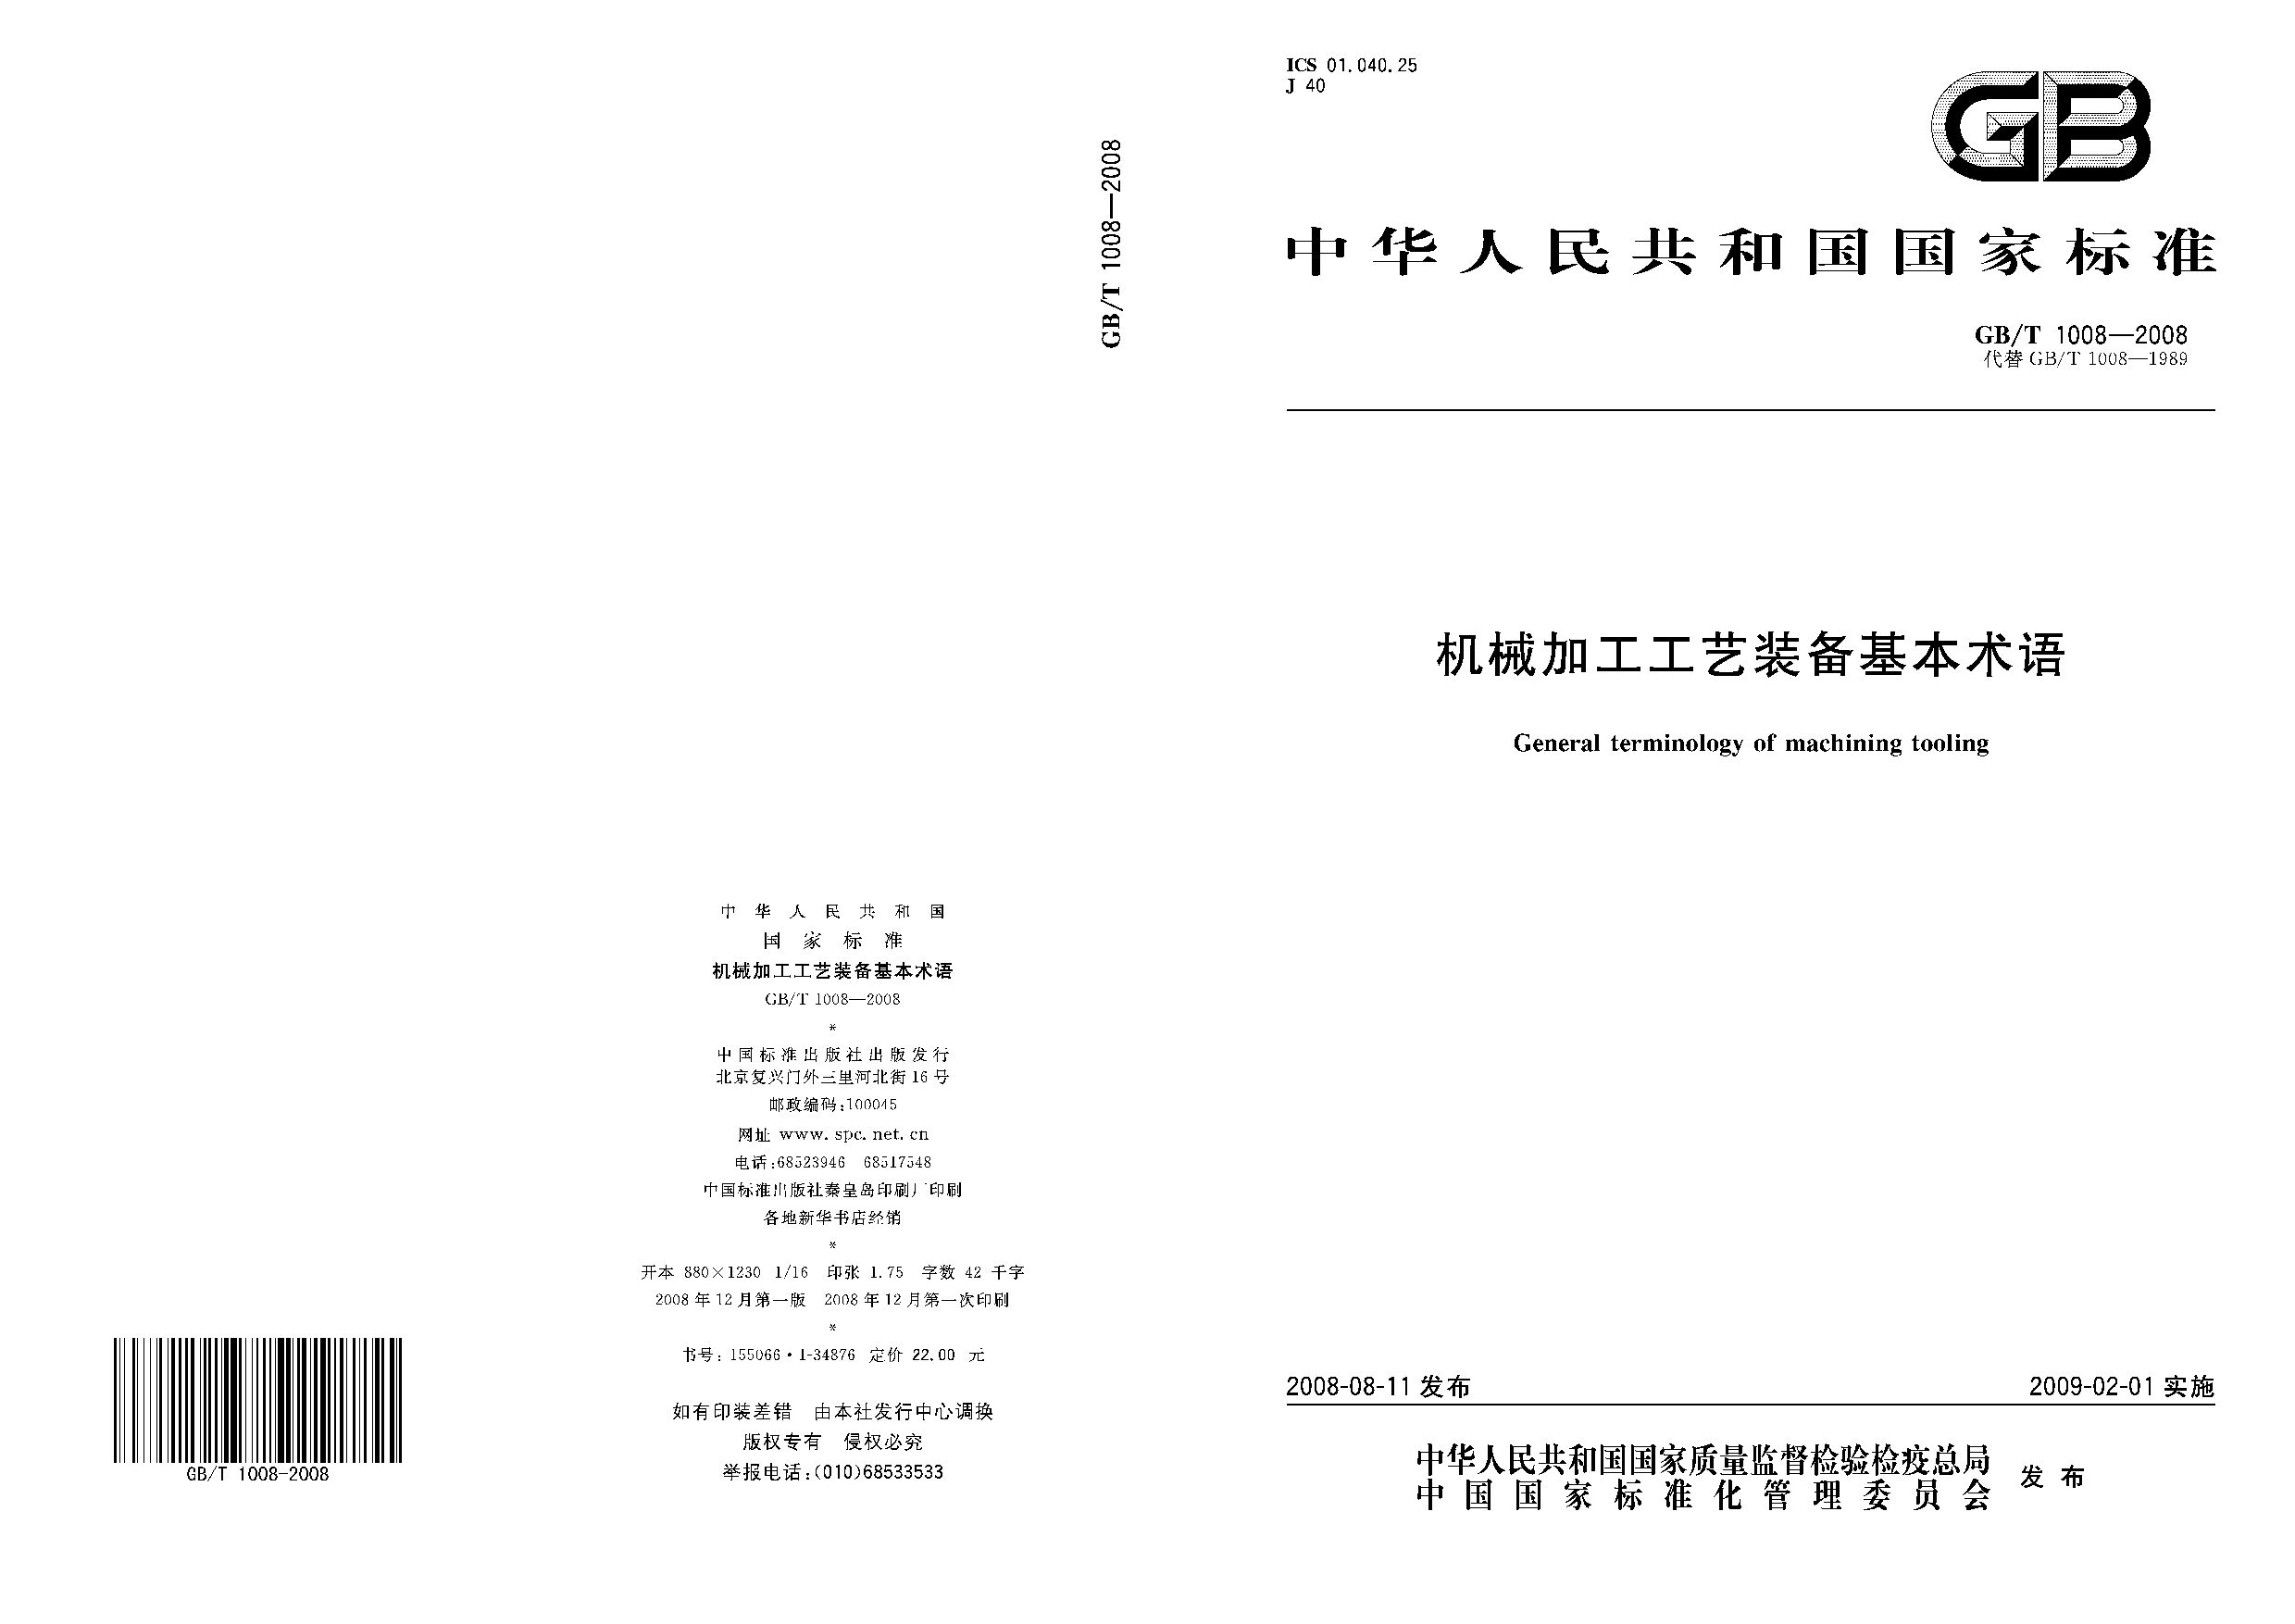 GB/T 1008-2008封面图